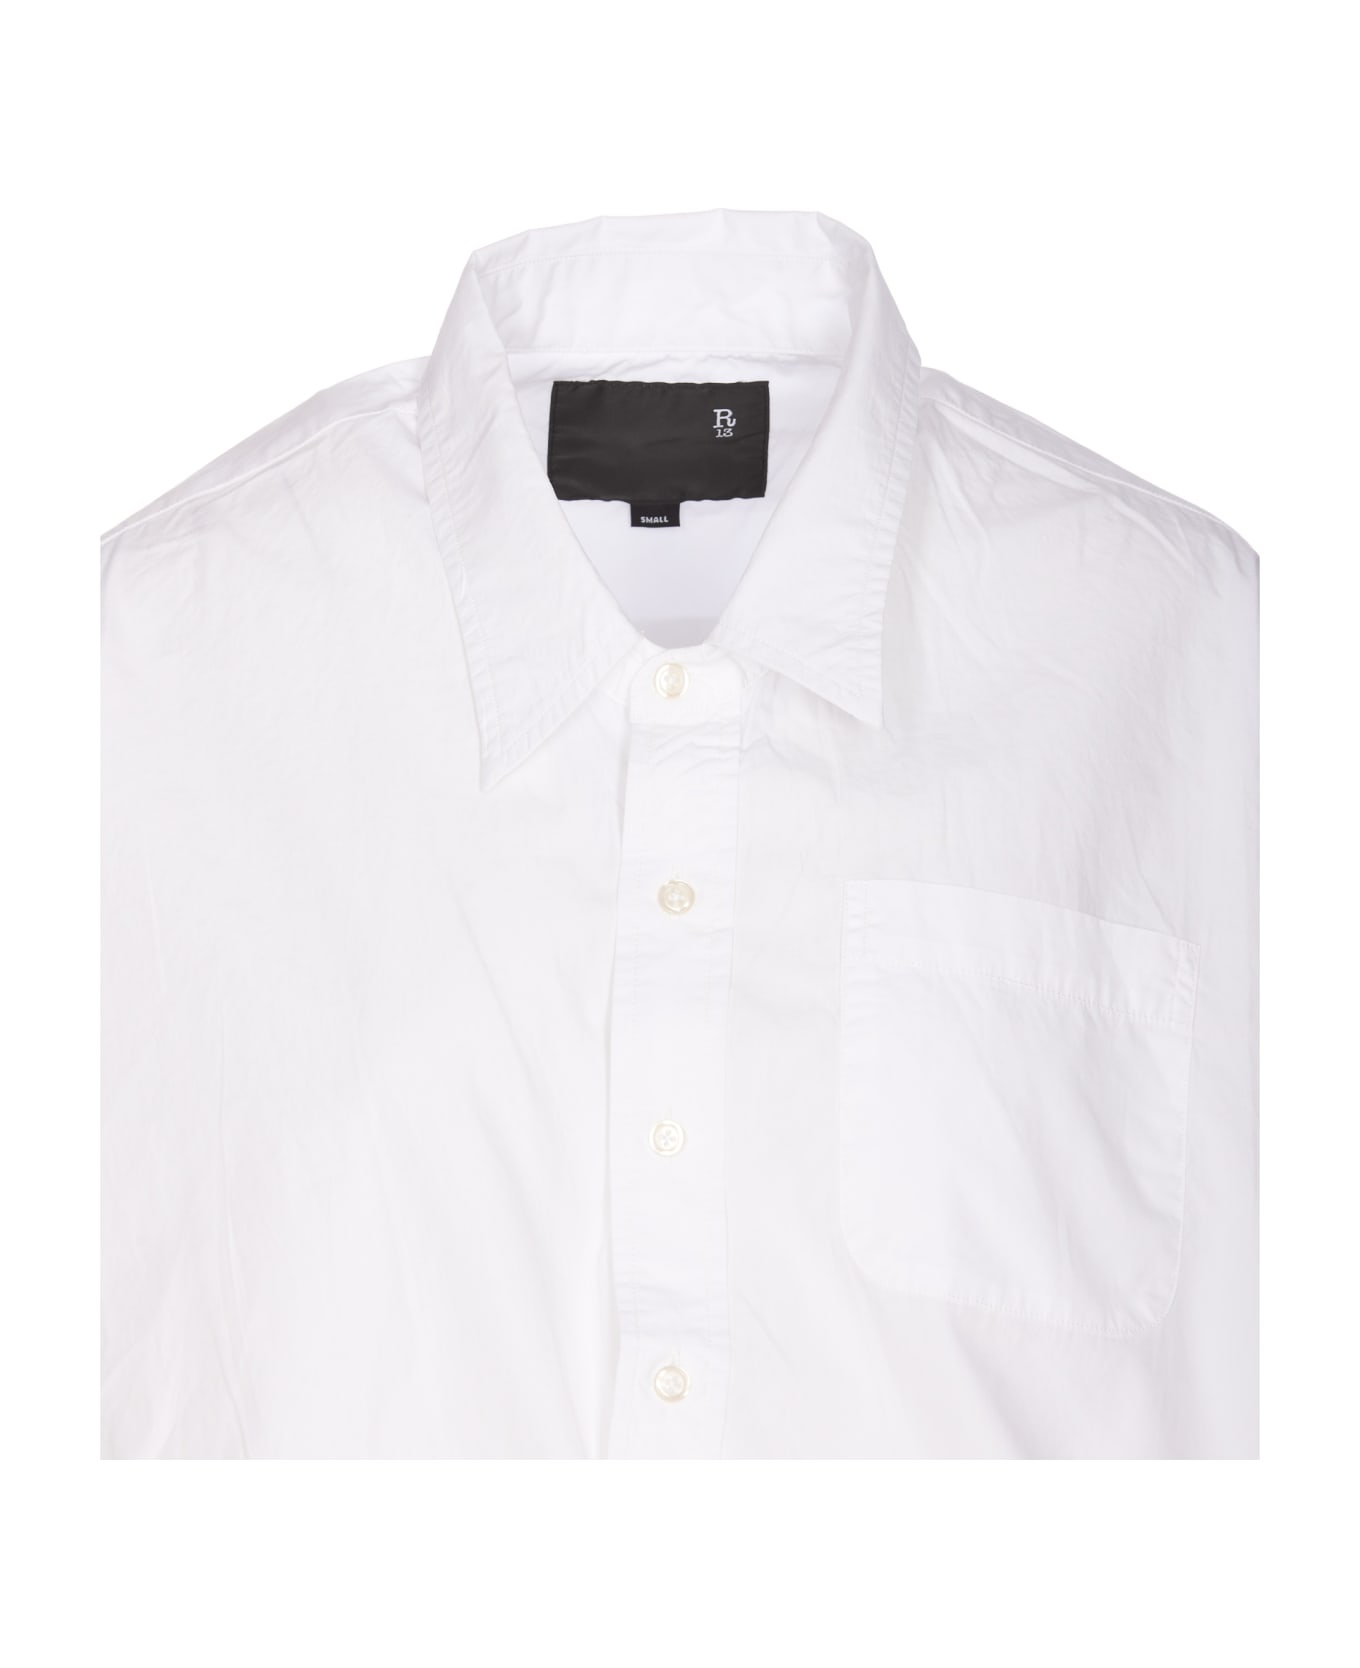 R13 Crossover Bubble Shirt - White シャツ